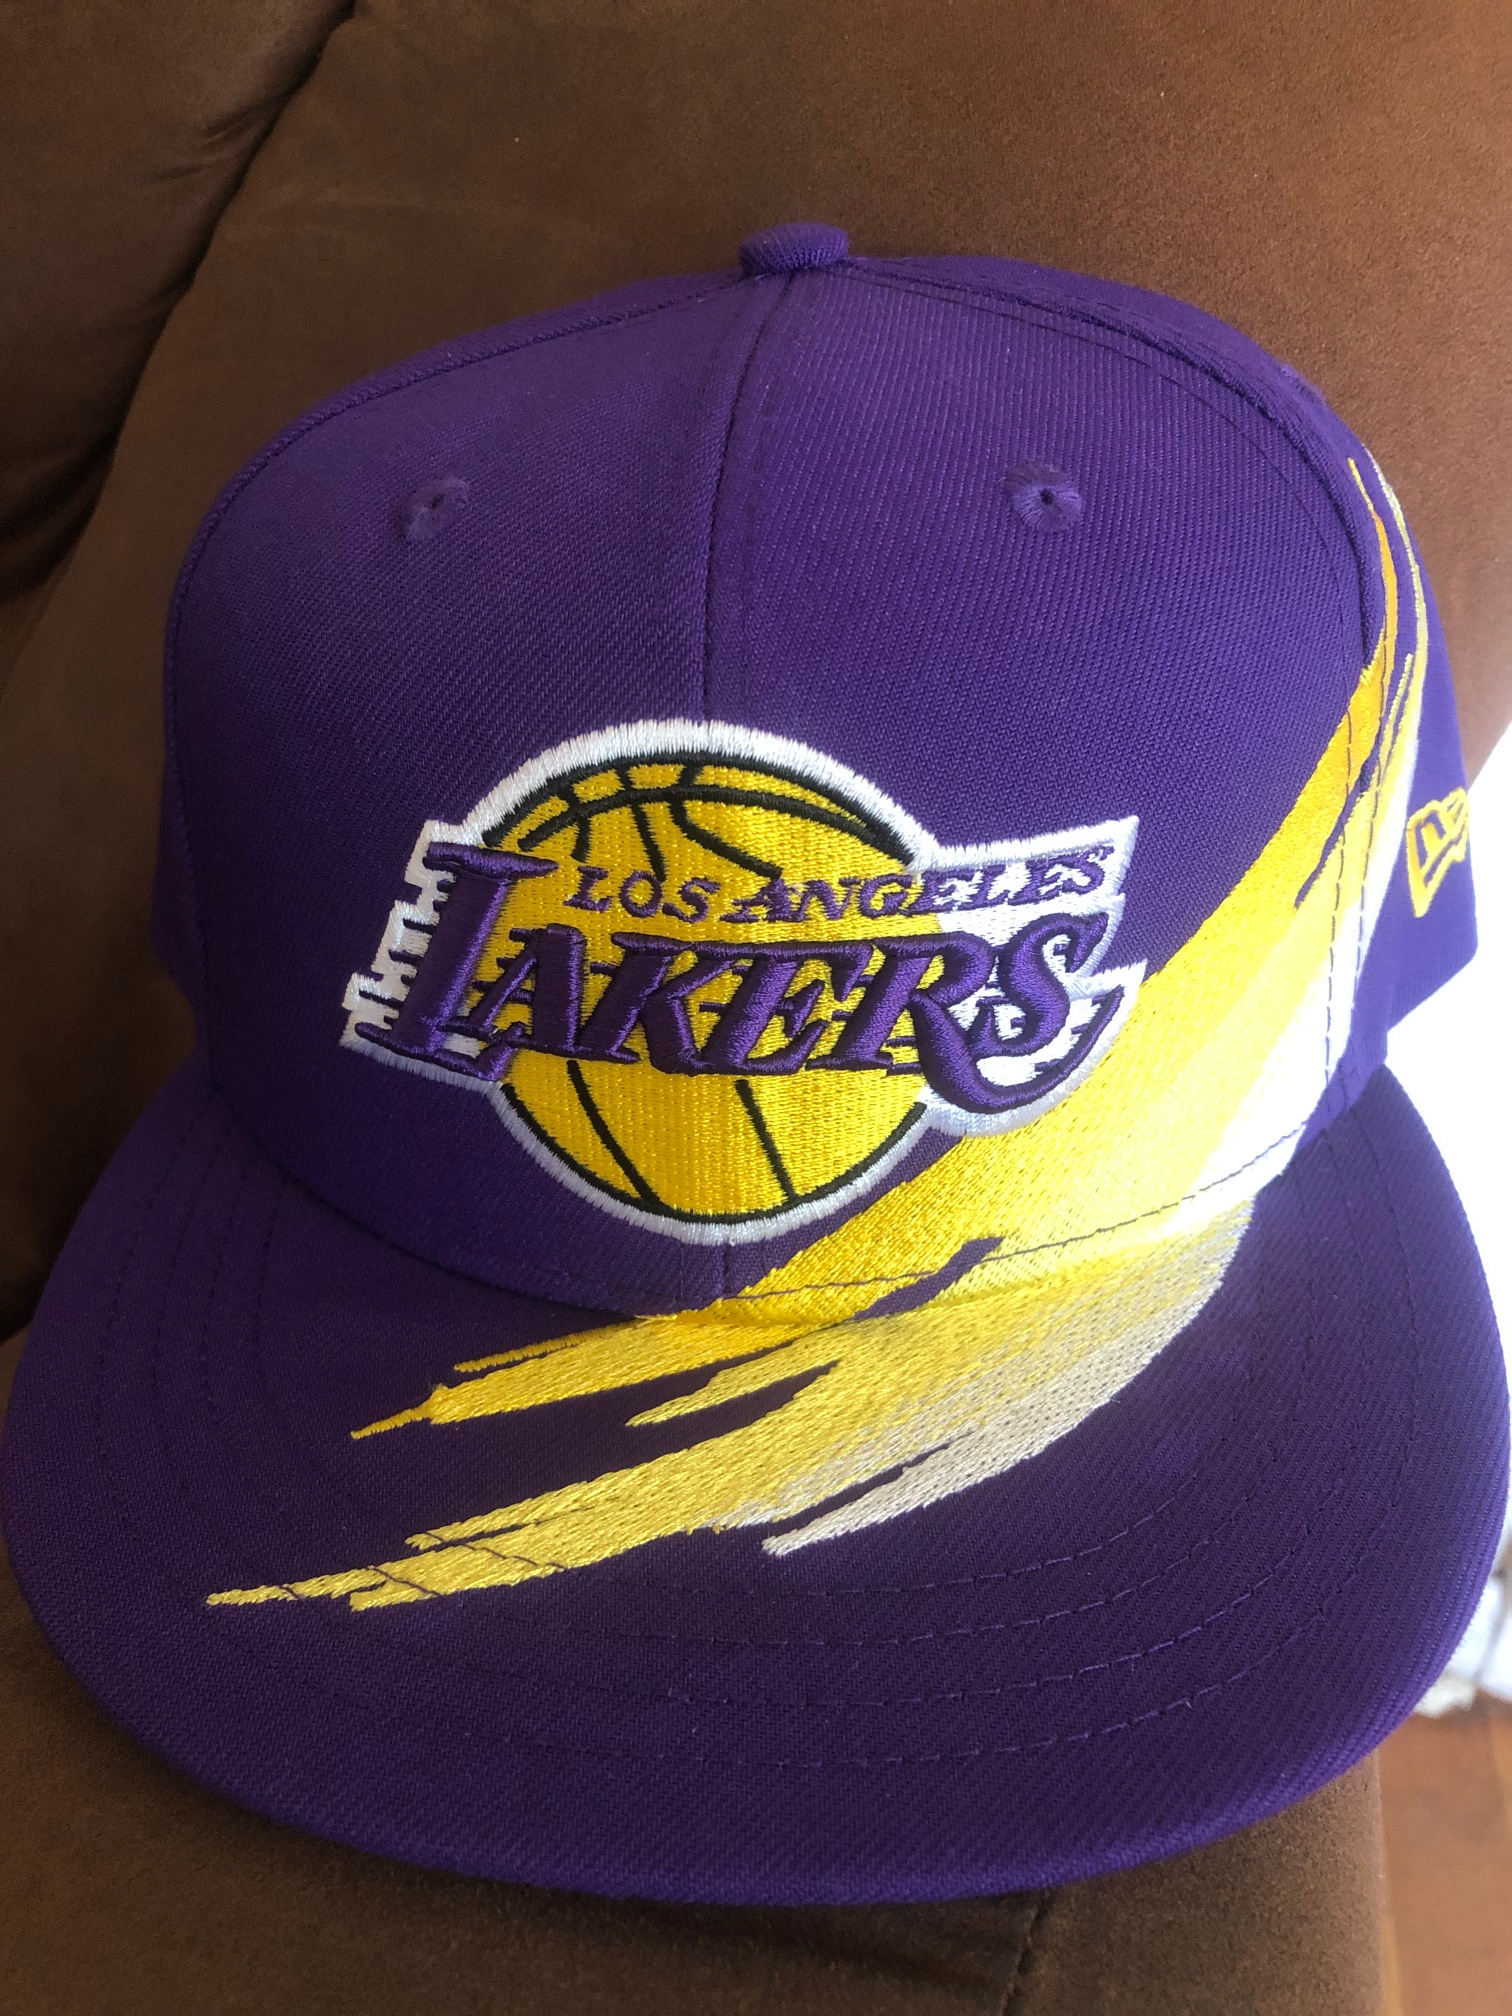 Los Angeles Lakers New Era NBA SnapBack